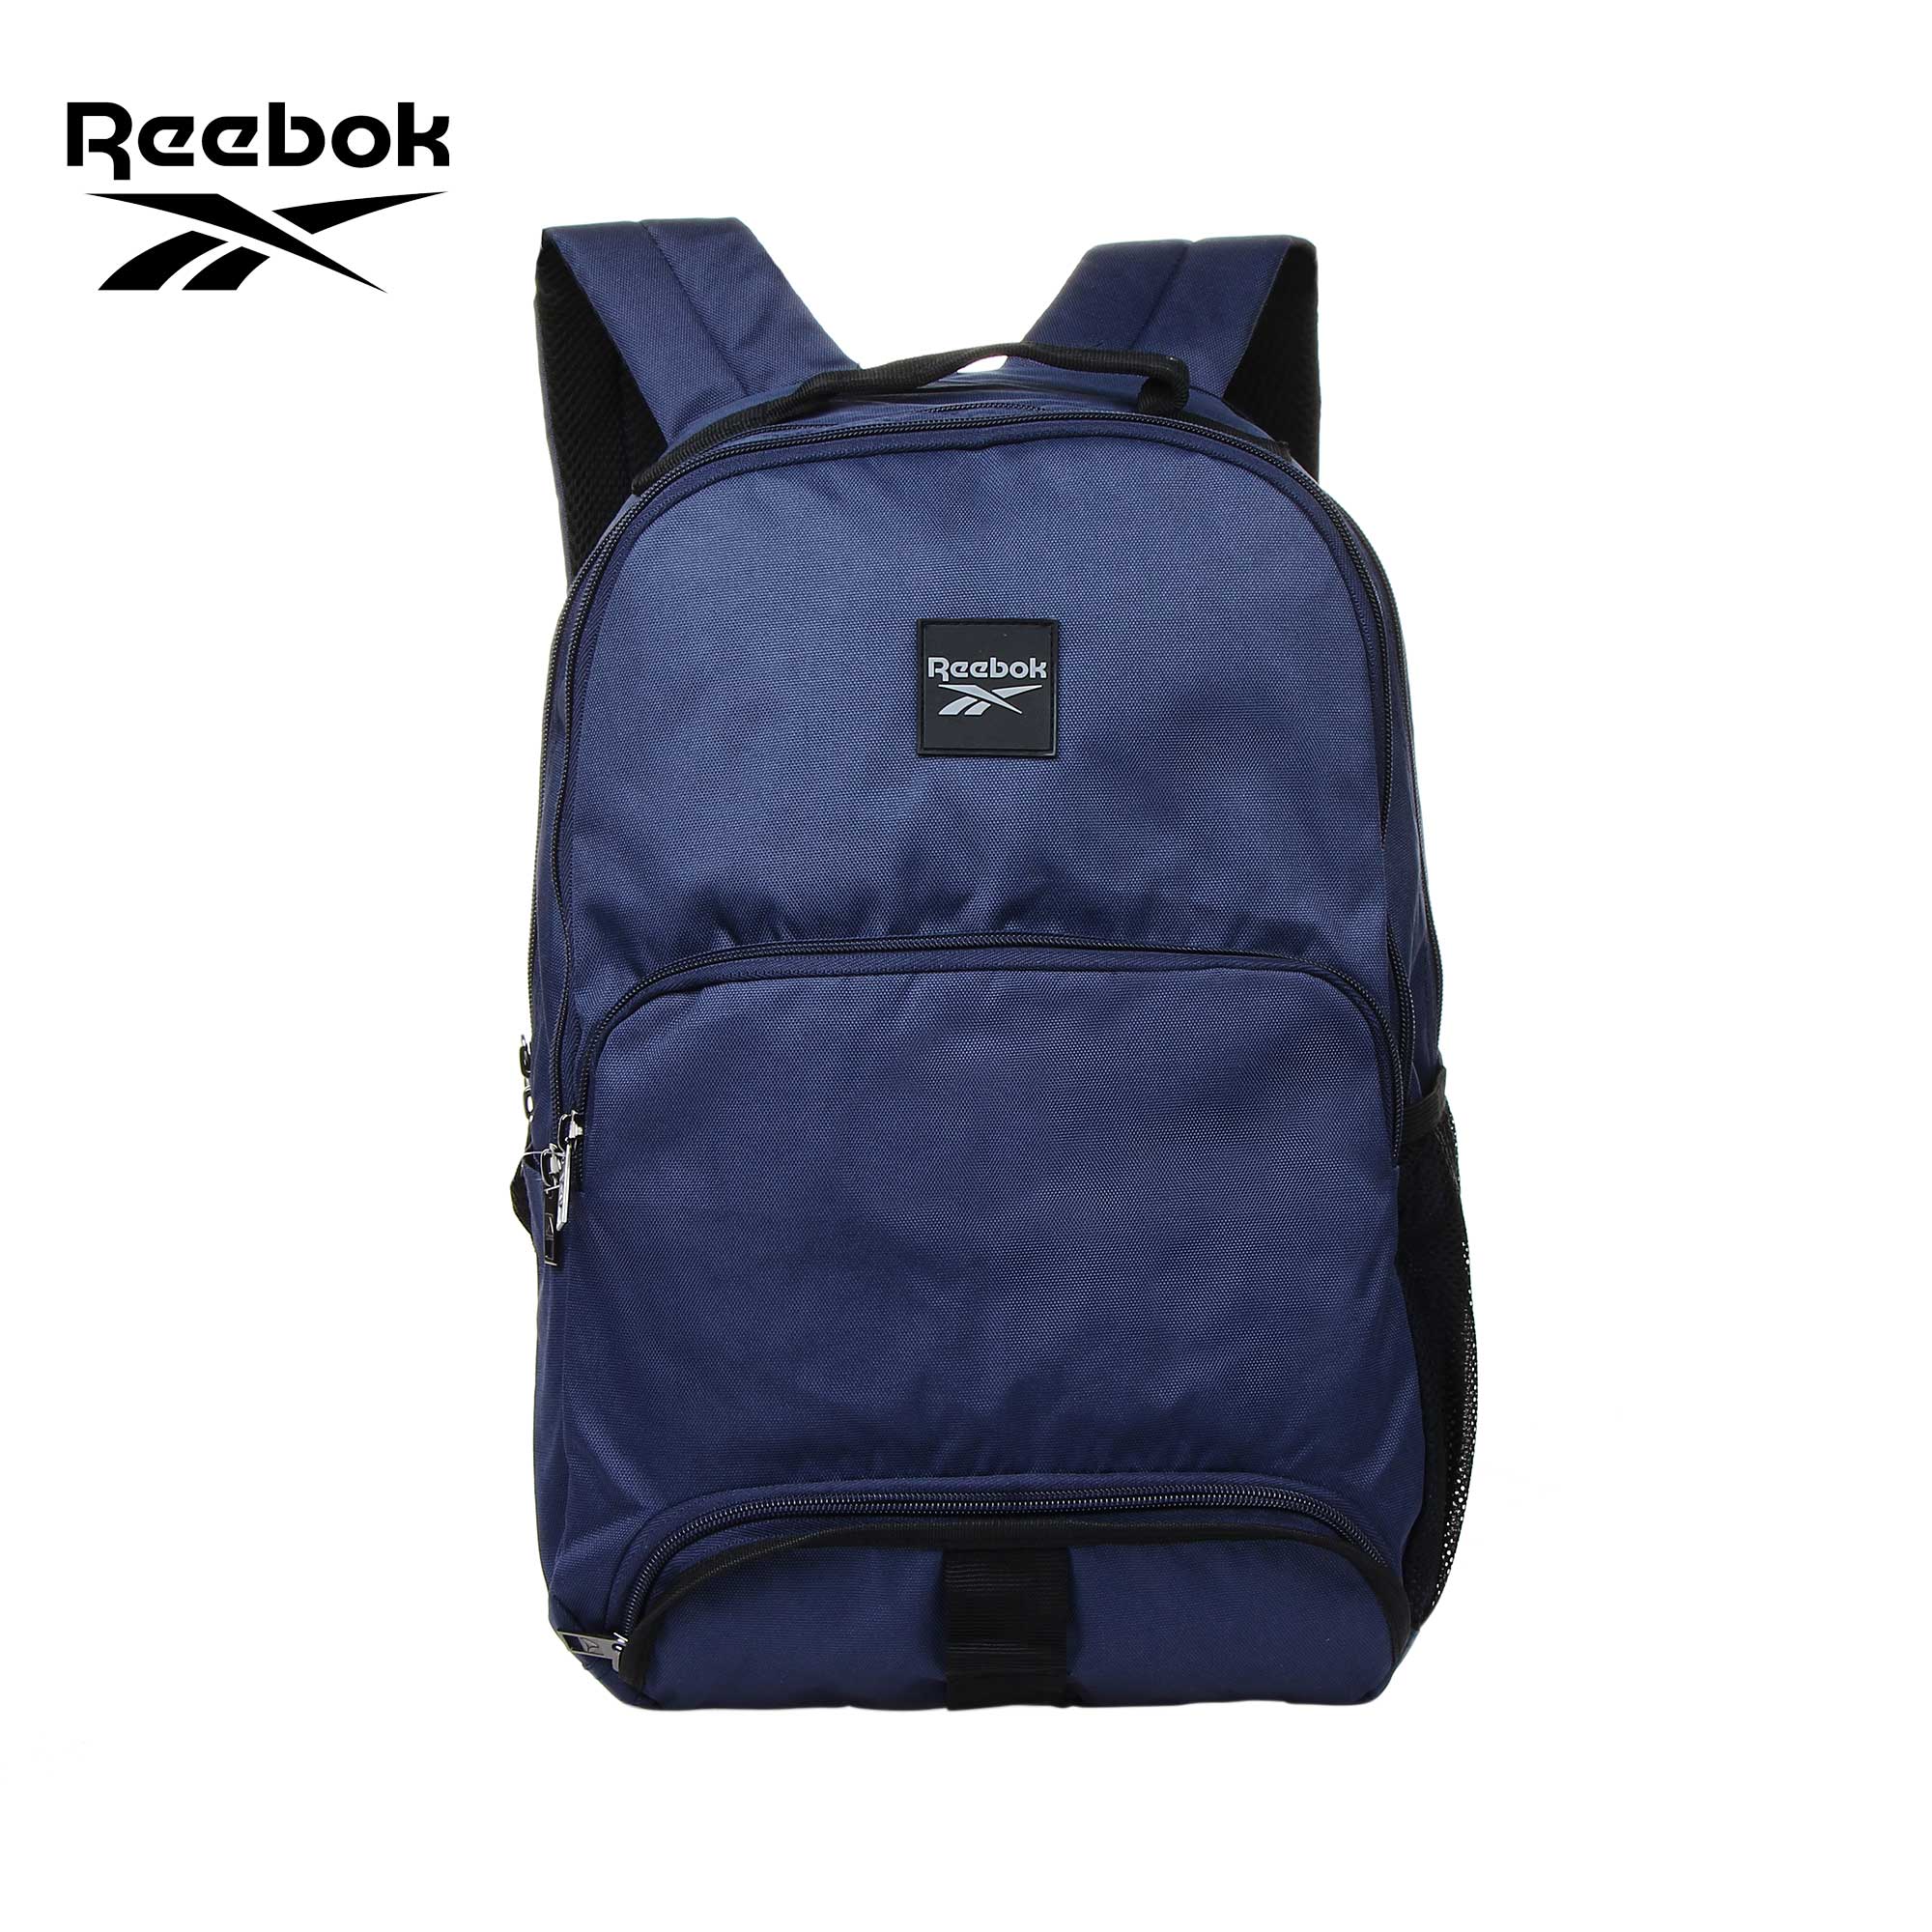 reebok backpack philippines